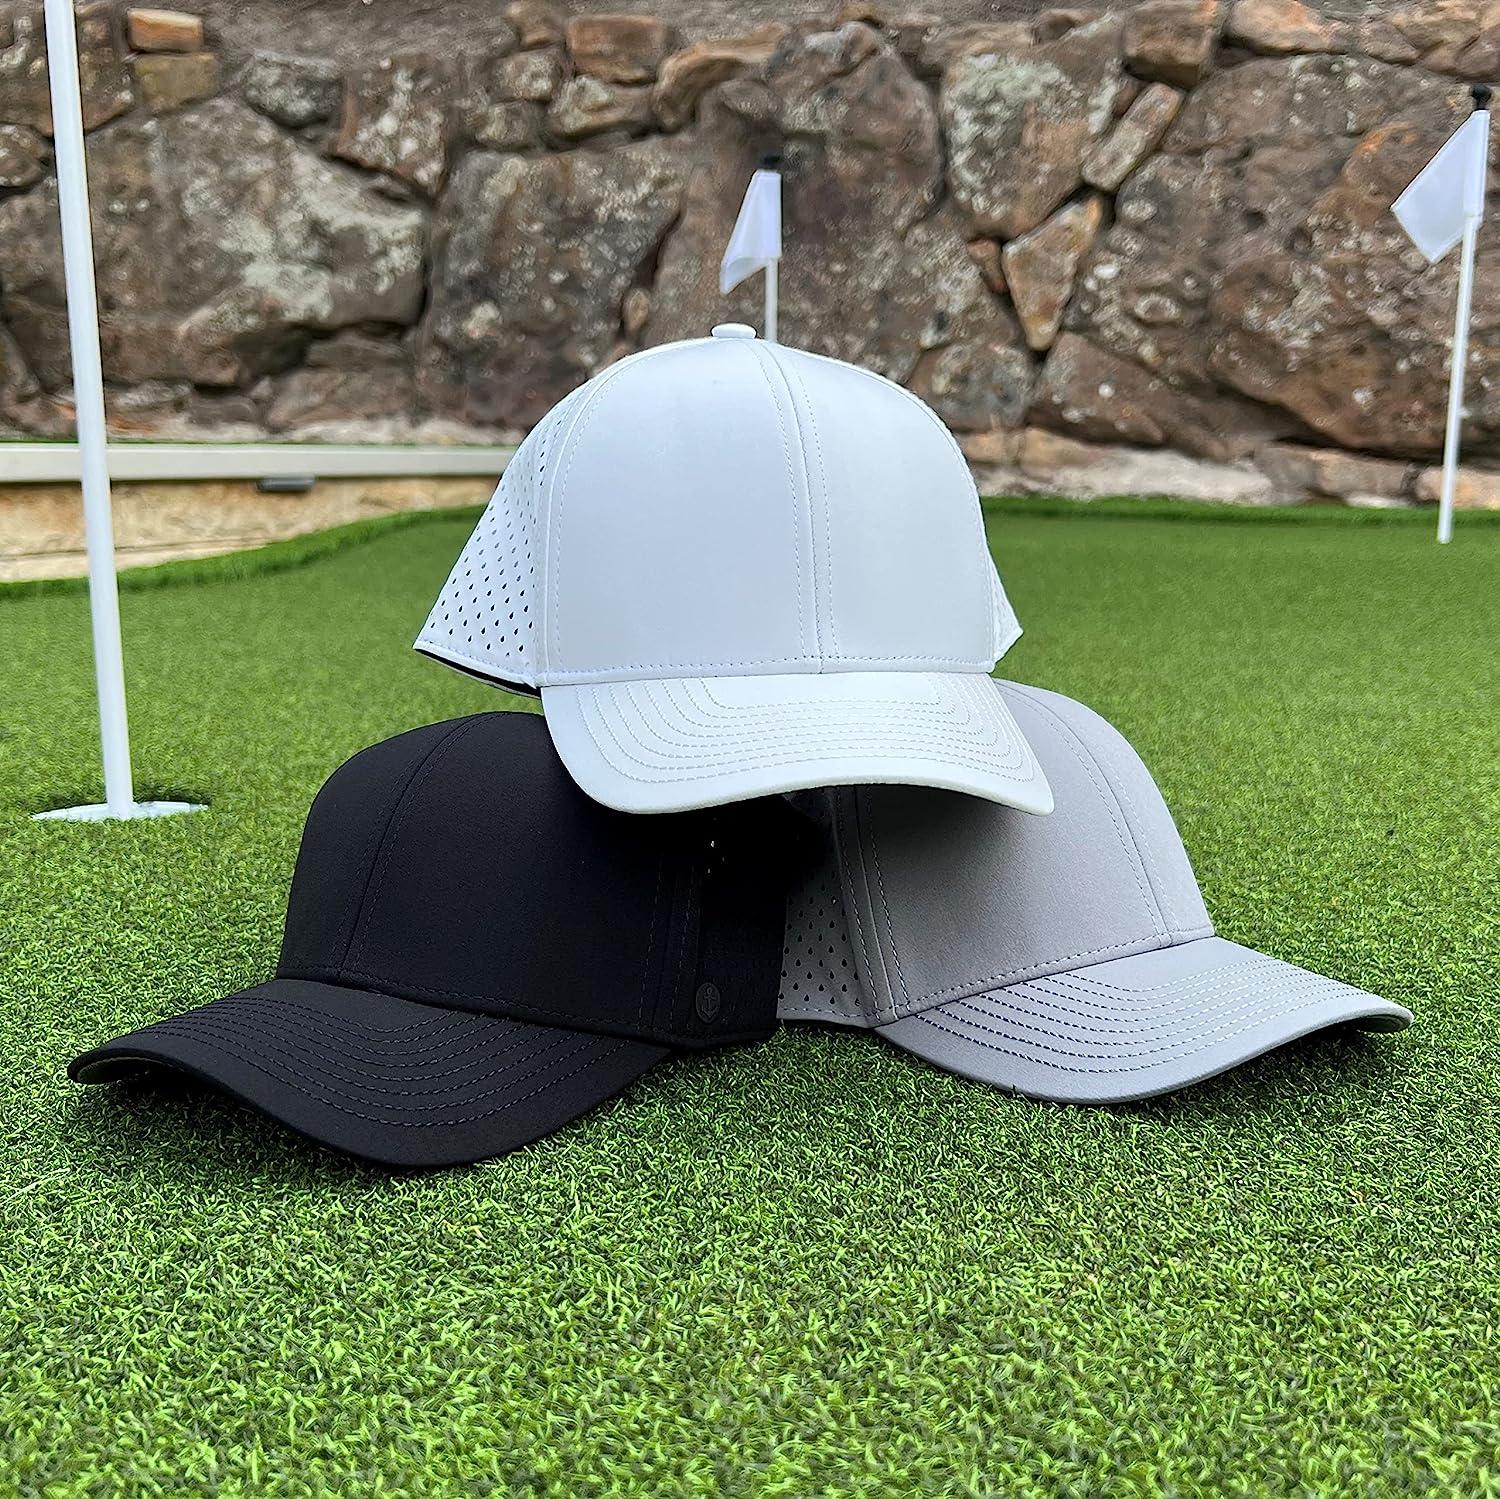 ANKOR Ultra Performance Water-Resistant UPF 50 Baseball Hat